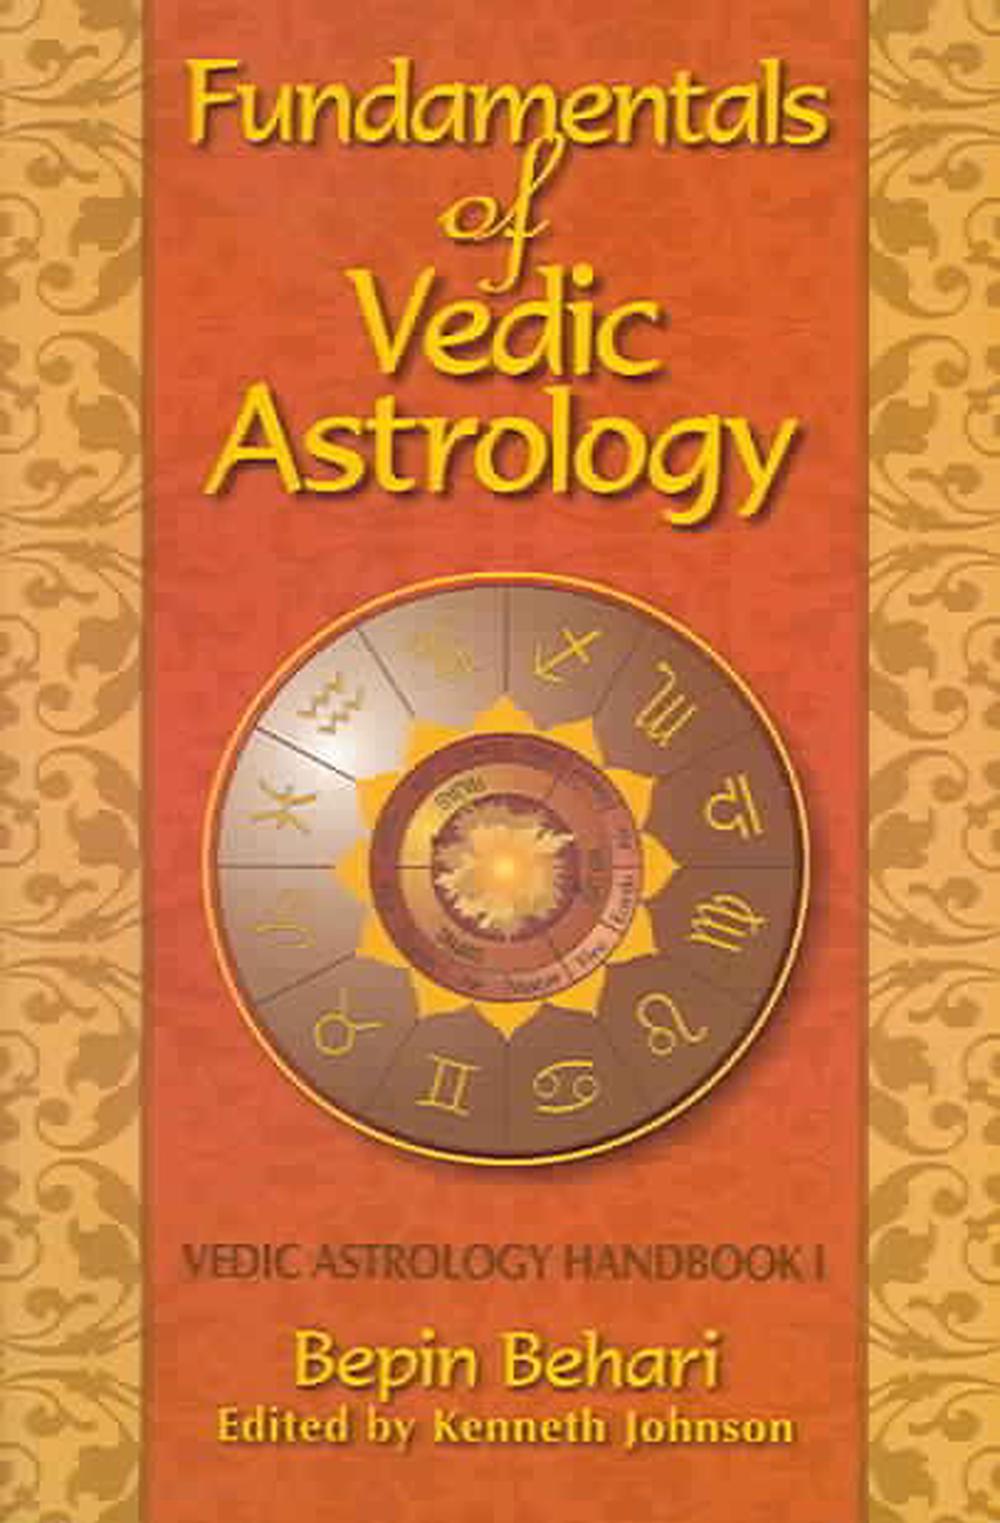 vedic astrology dark complexion google books